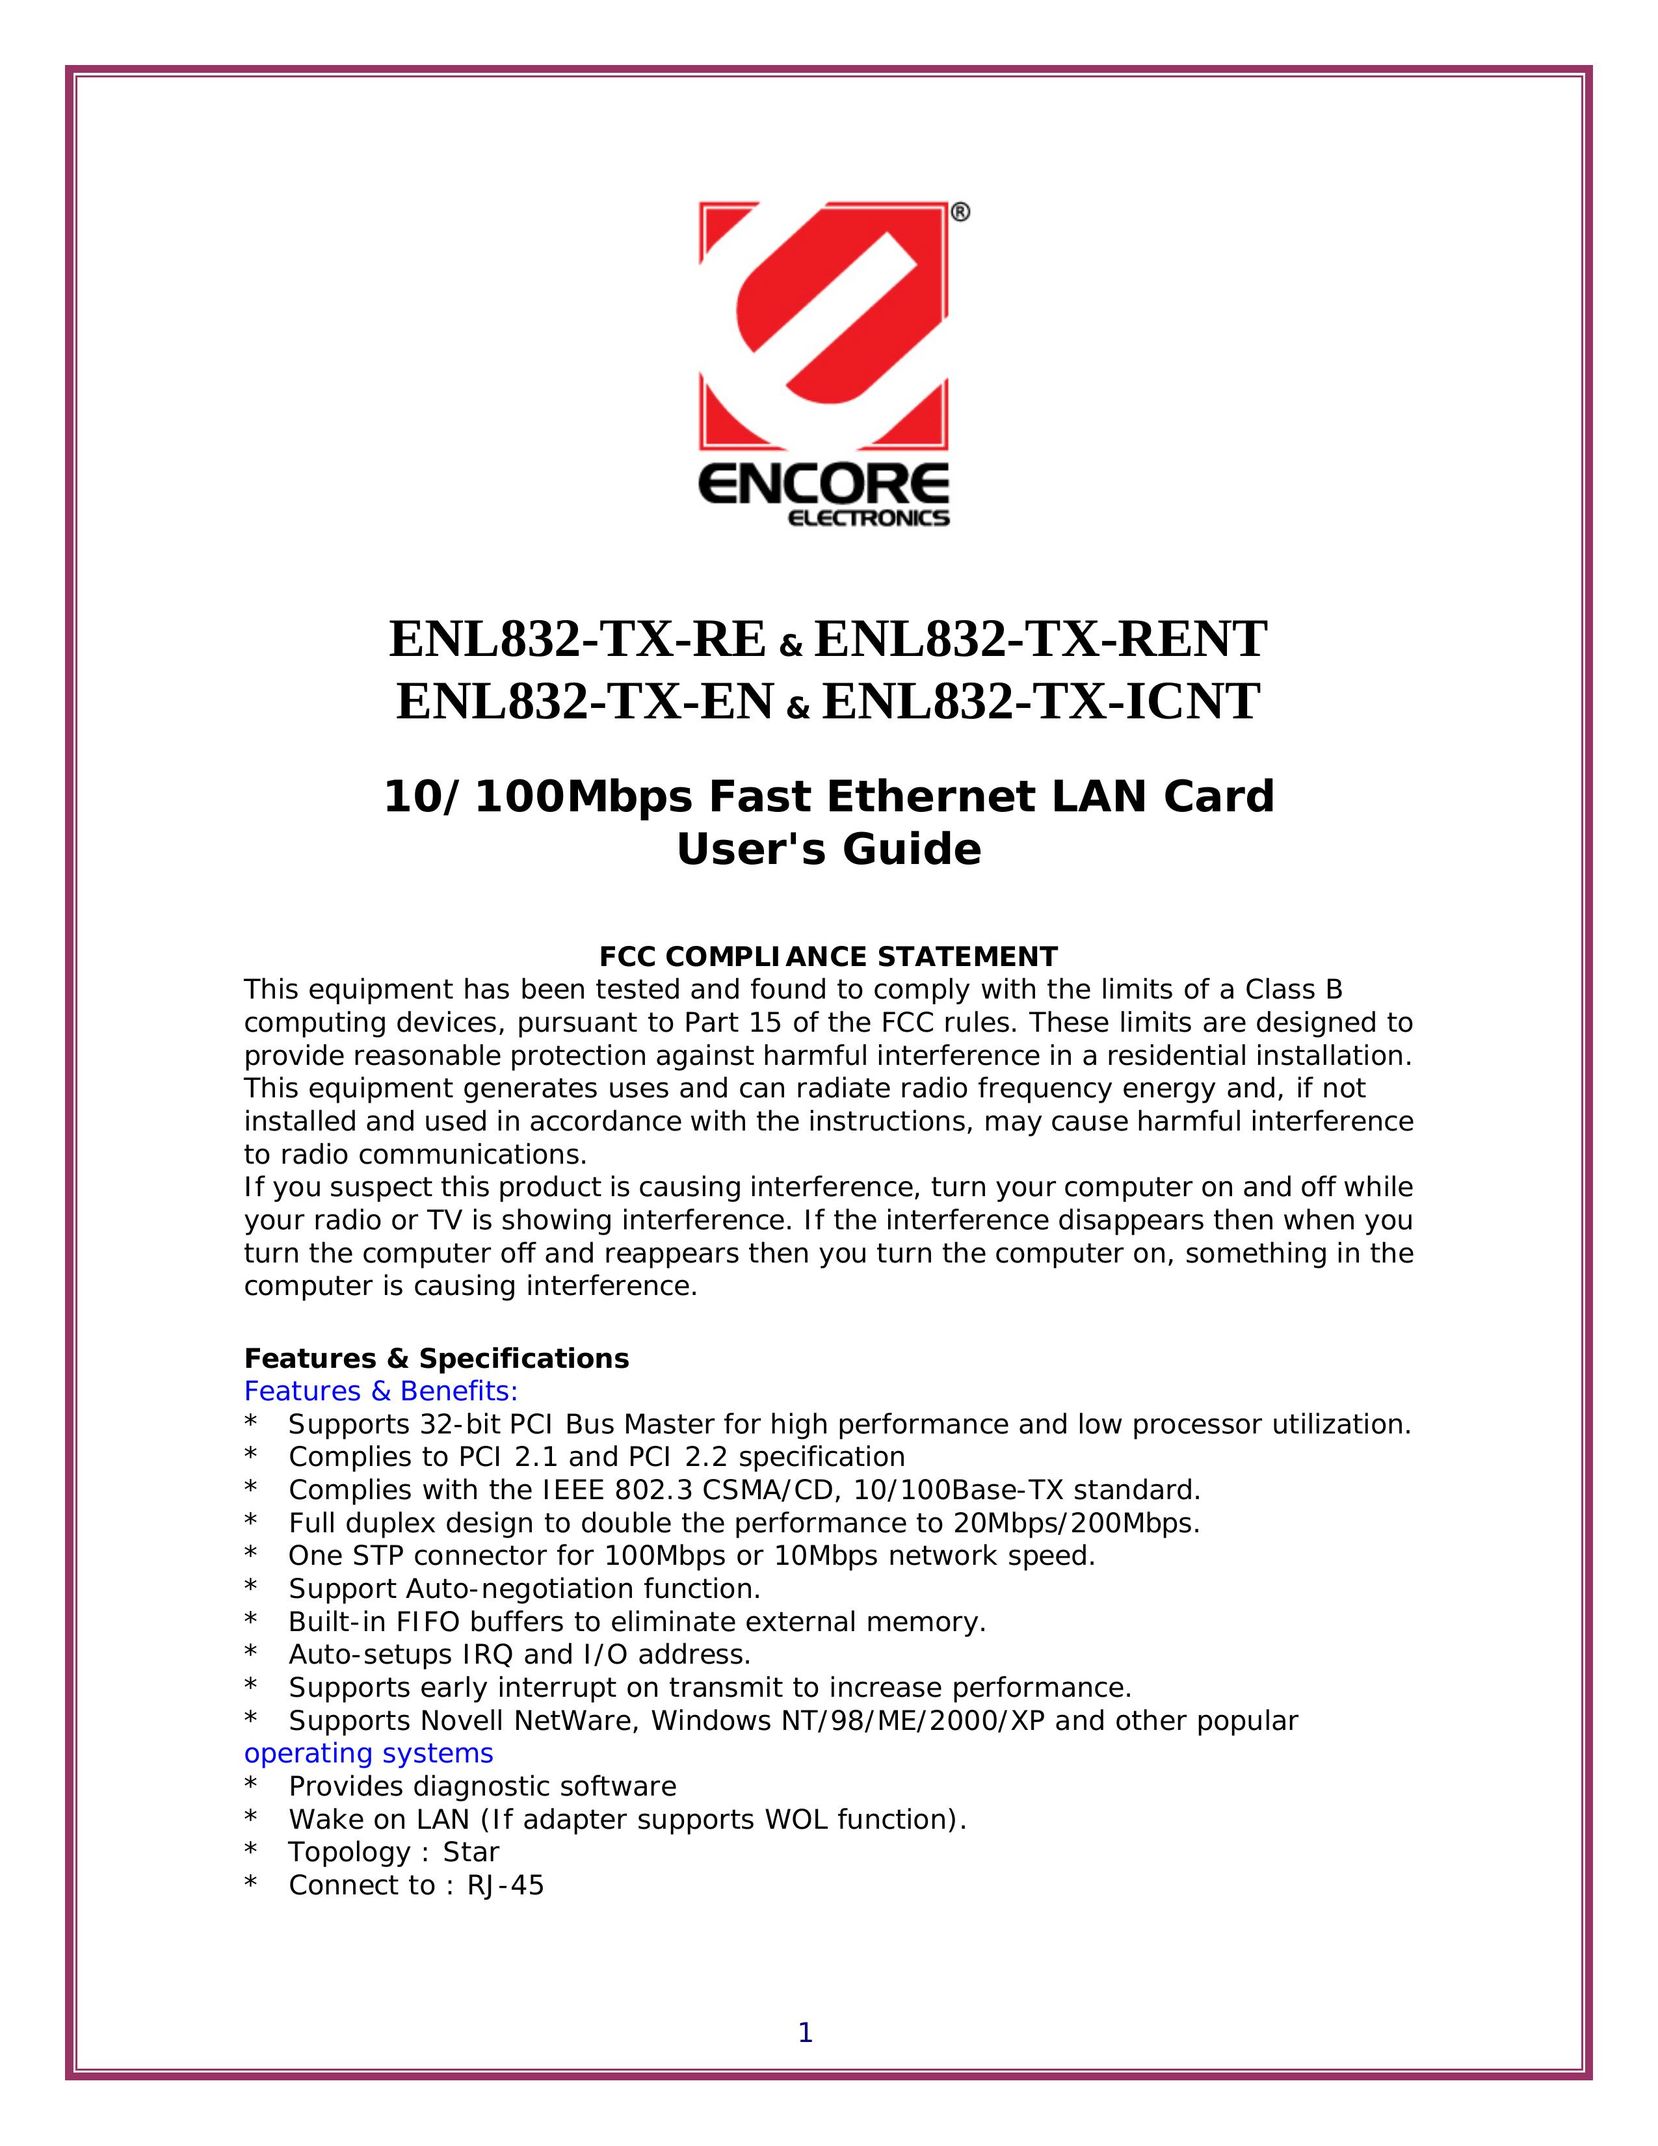 Encore electronic ENL832-TX-RE Network Card User Manual